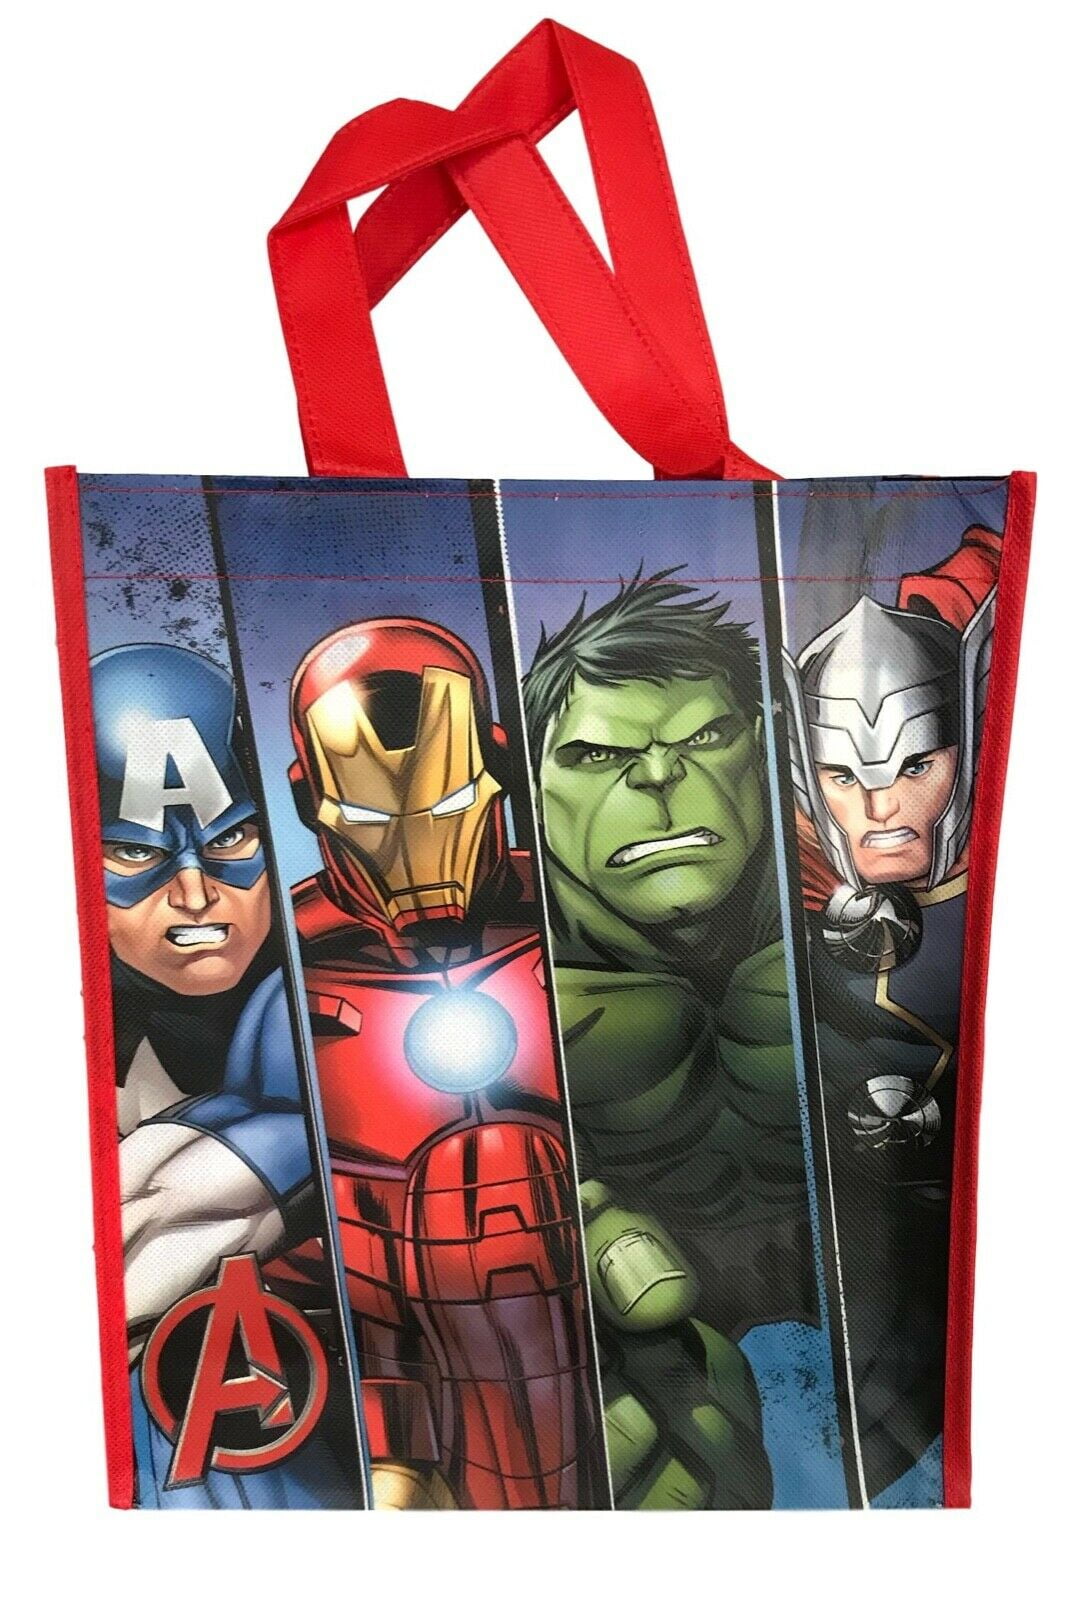 NWT 15.5" x 13.5" x 6.75" Marvel AVENGERS Large Reusable Tote Shopping Bag 